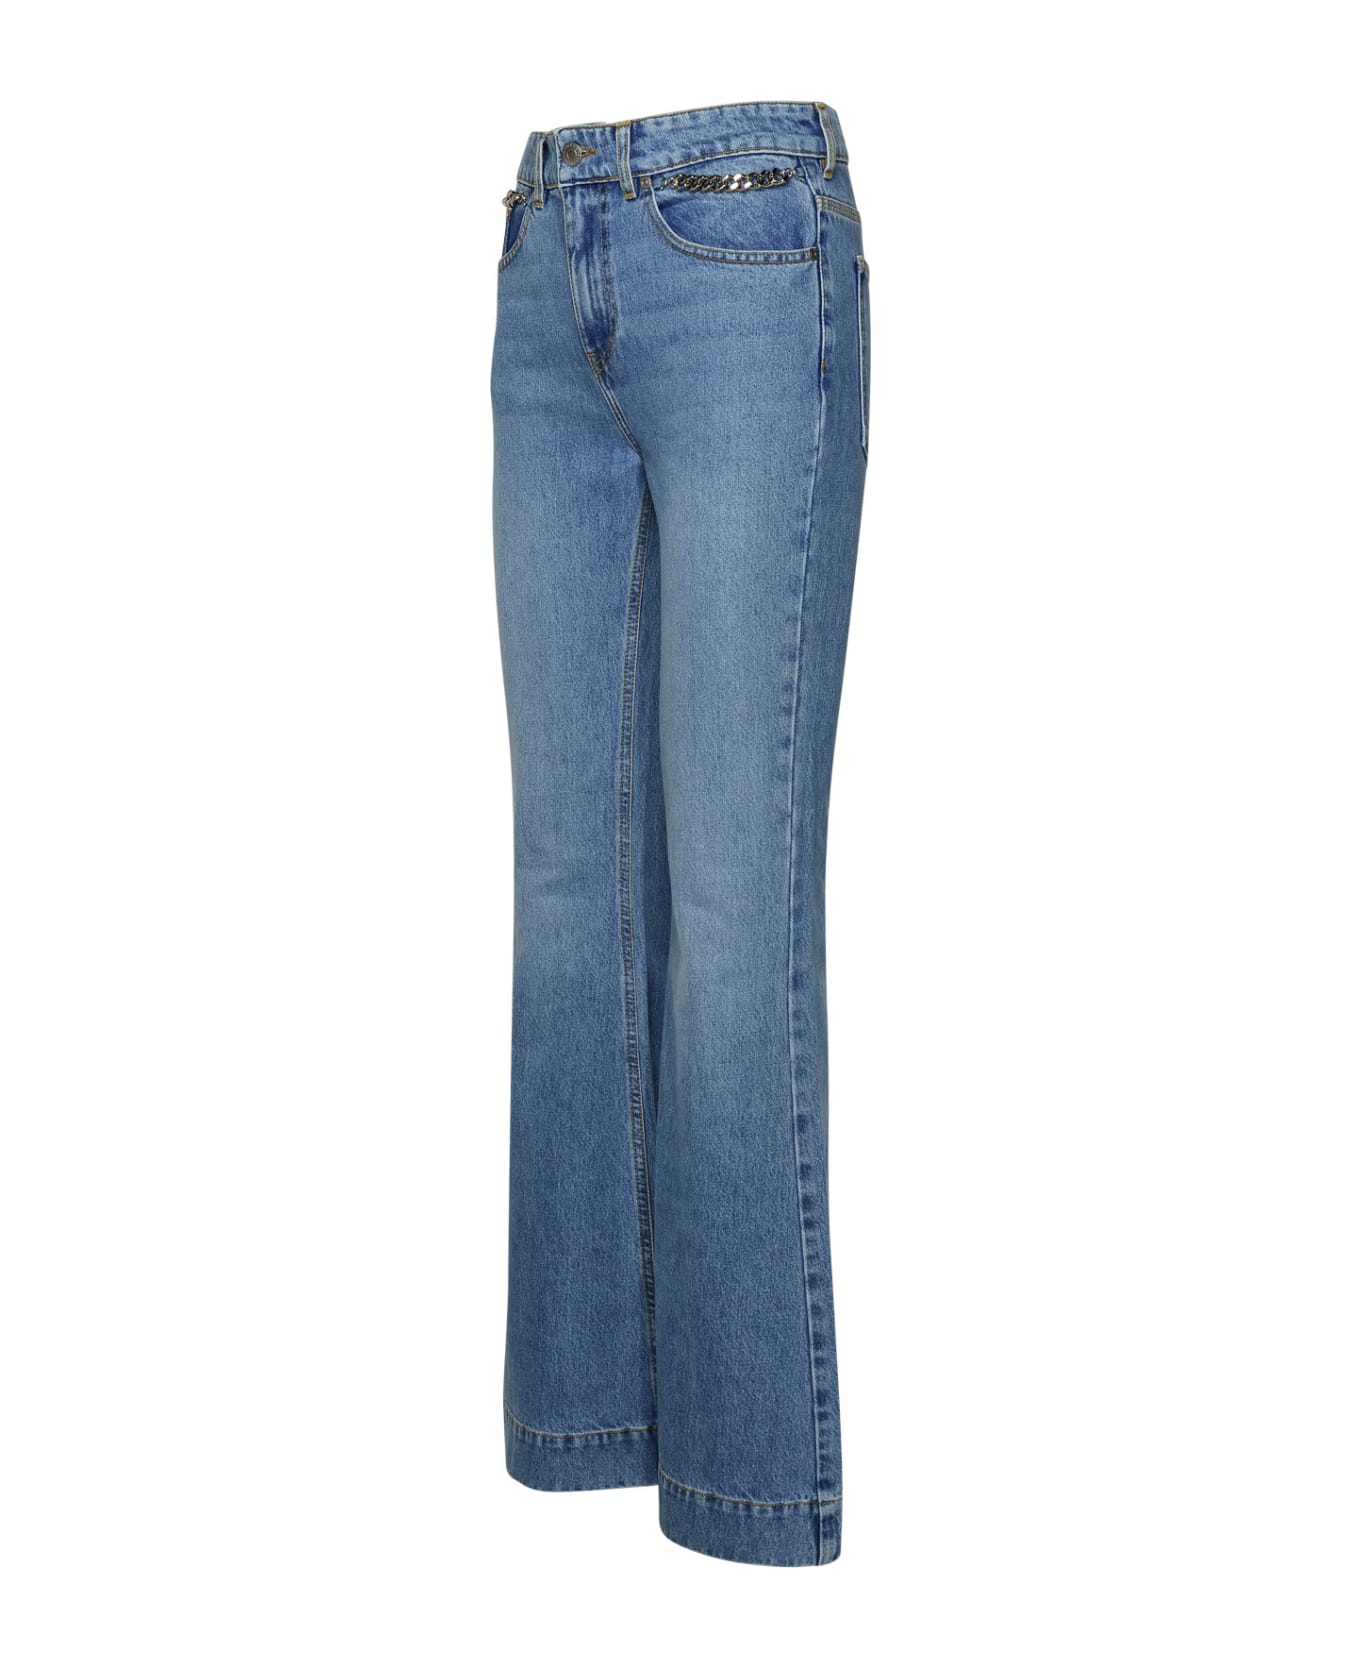 Stella McCartney Falabella Chain Flared Jeans - VINTAGE BLUE デニム